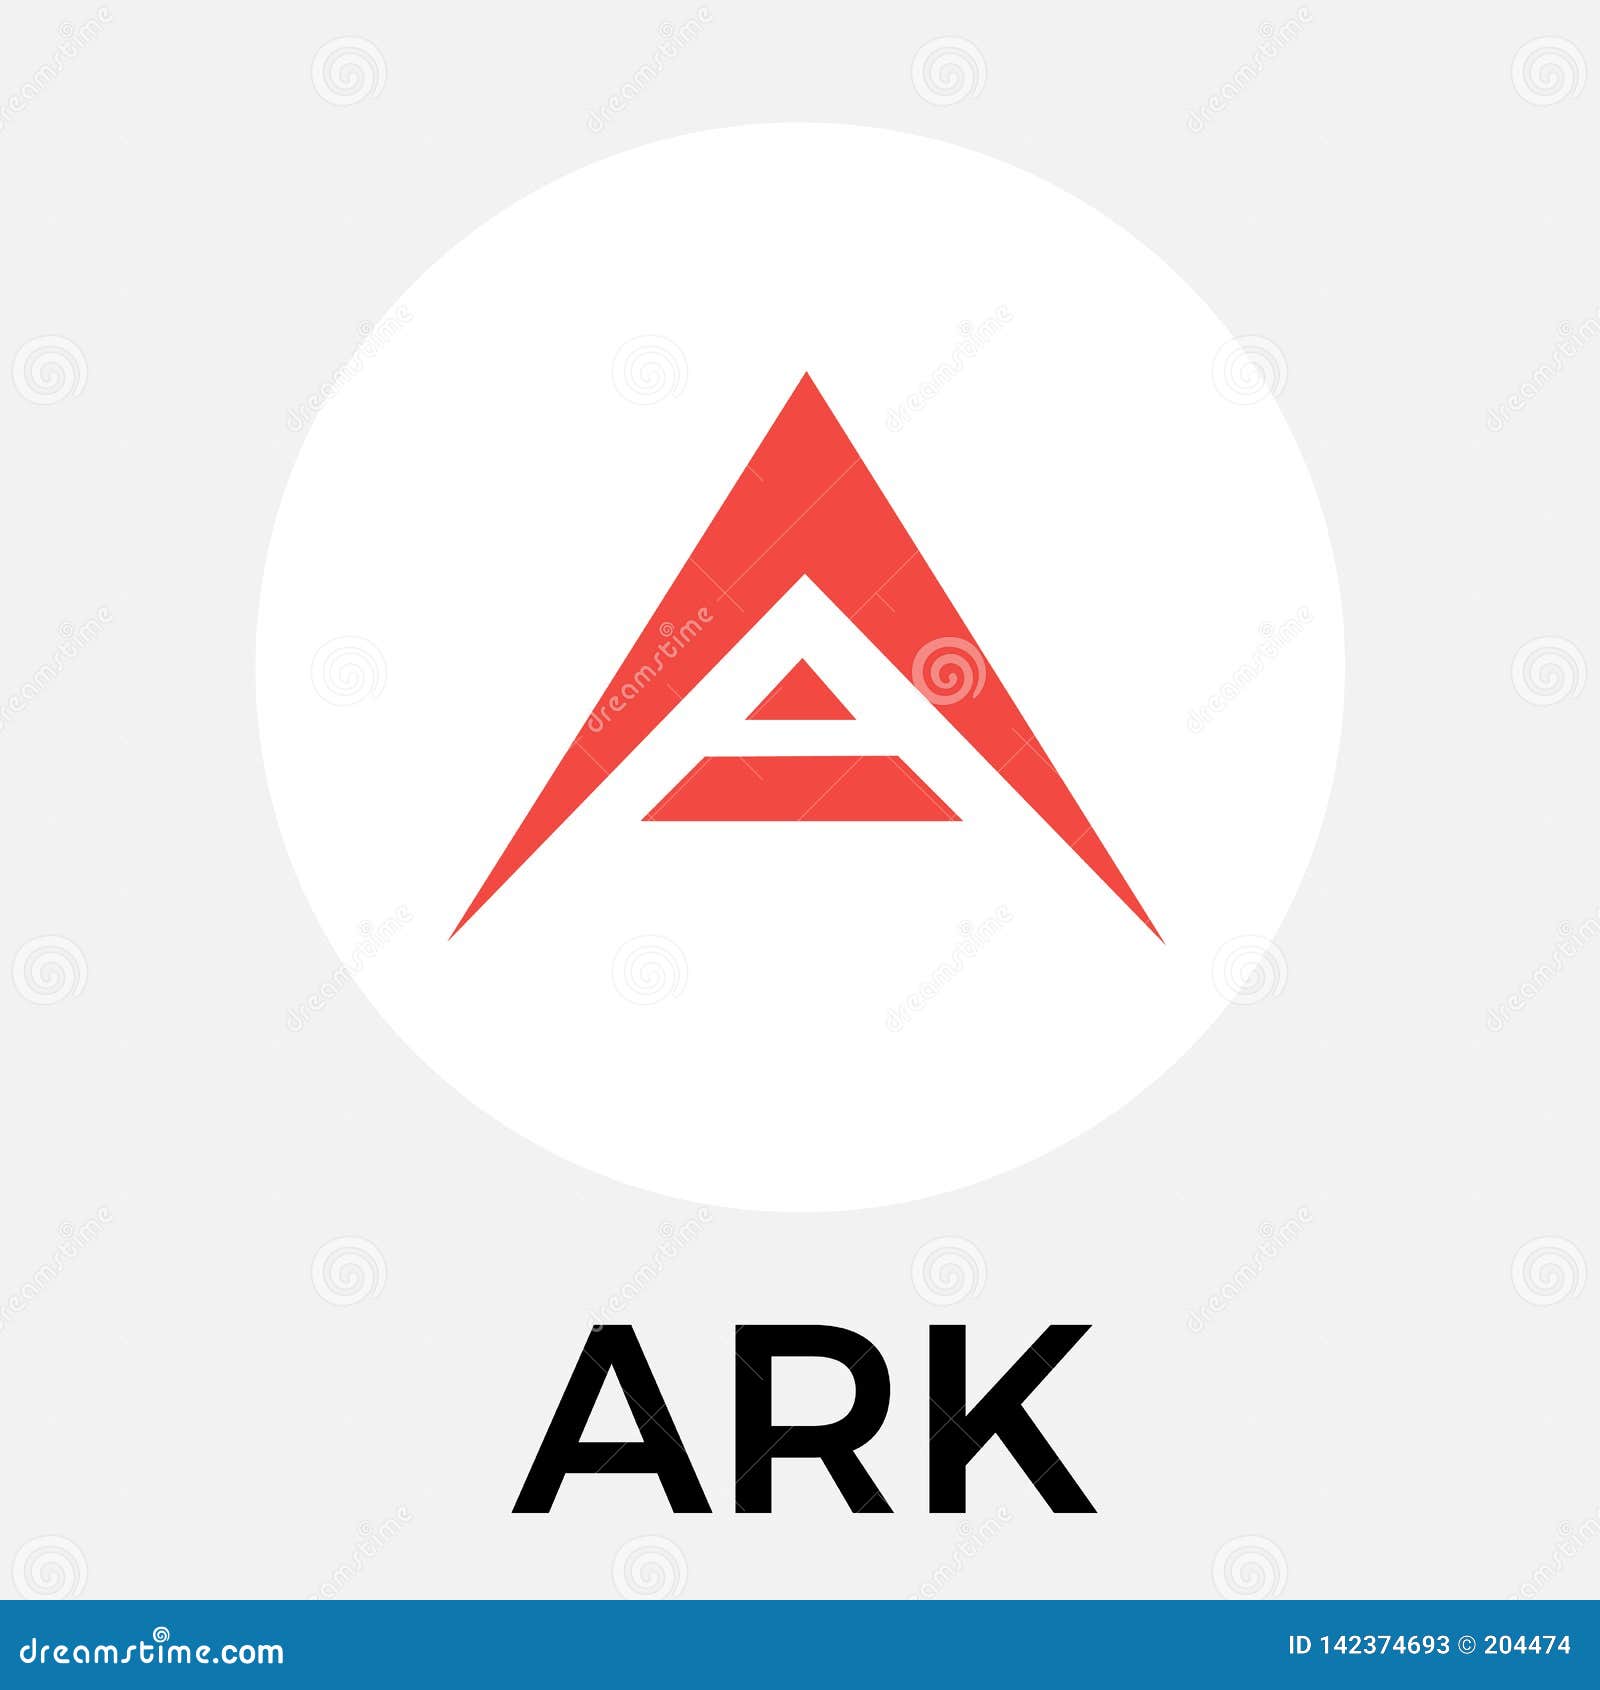 Ark Cryptocurrency Coin Logo - Blockchain Vector Stock ...